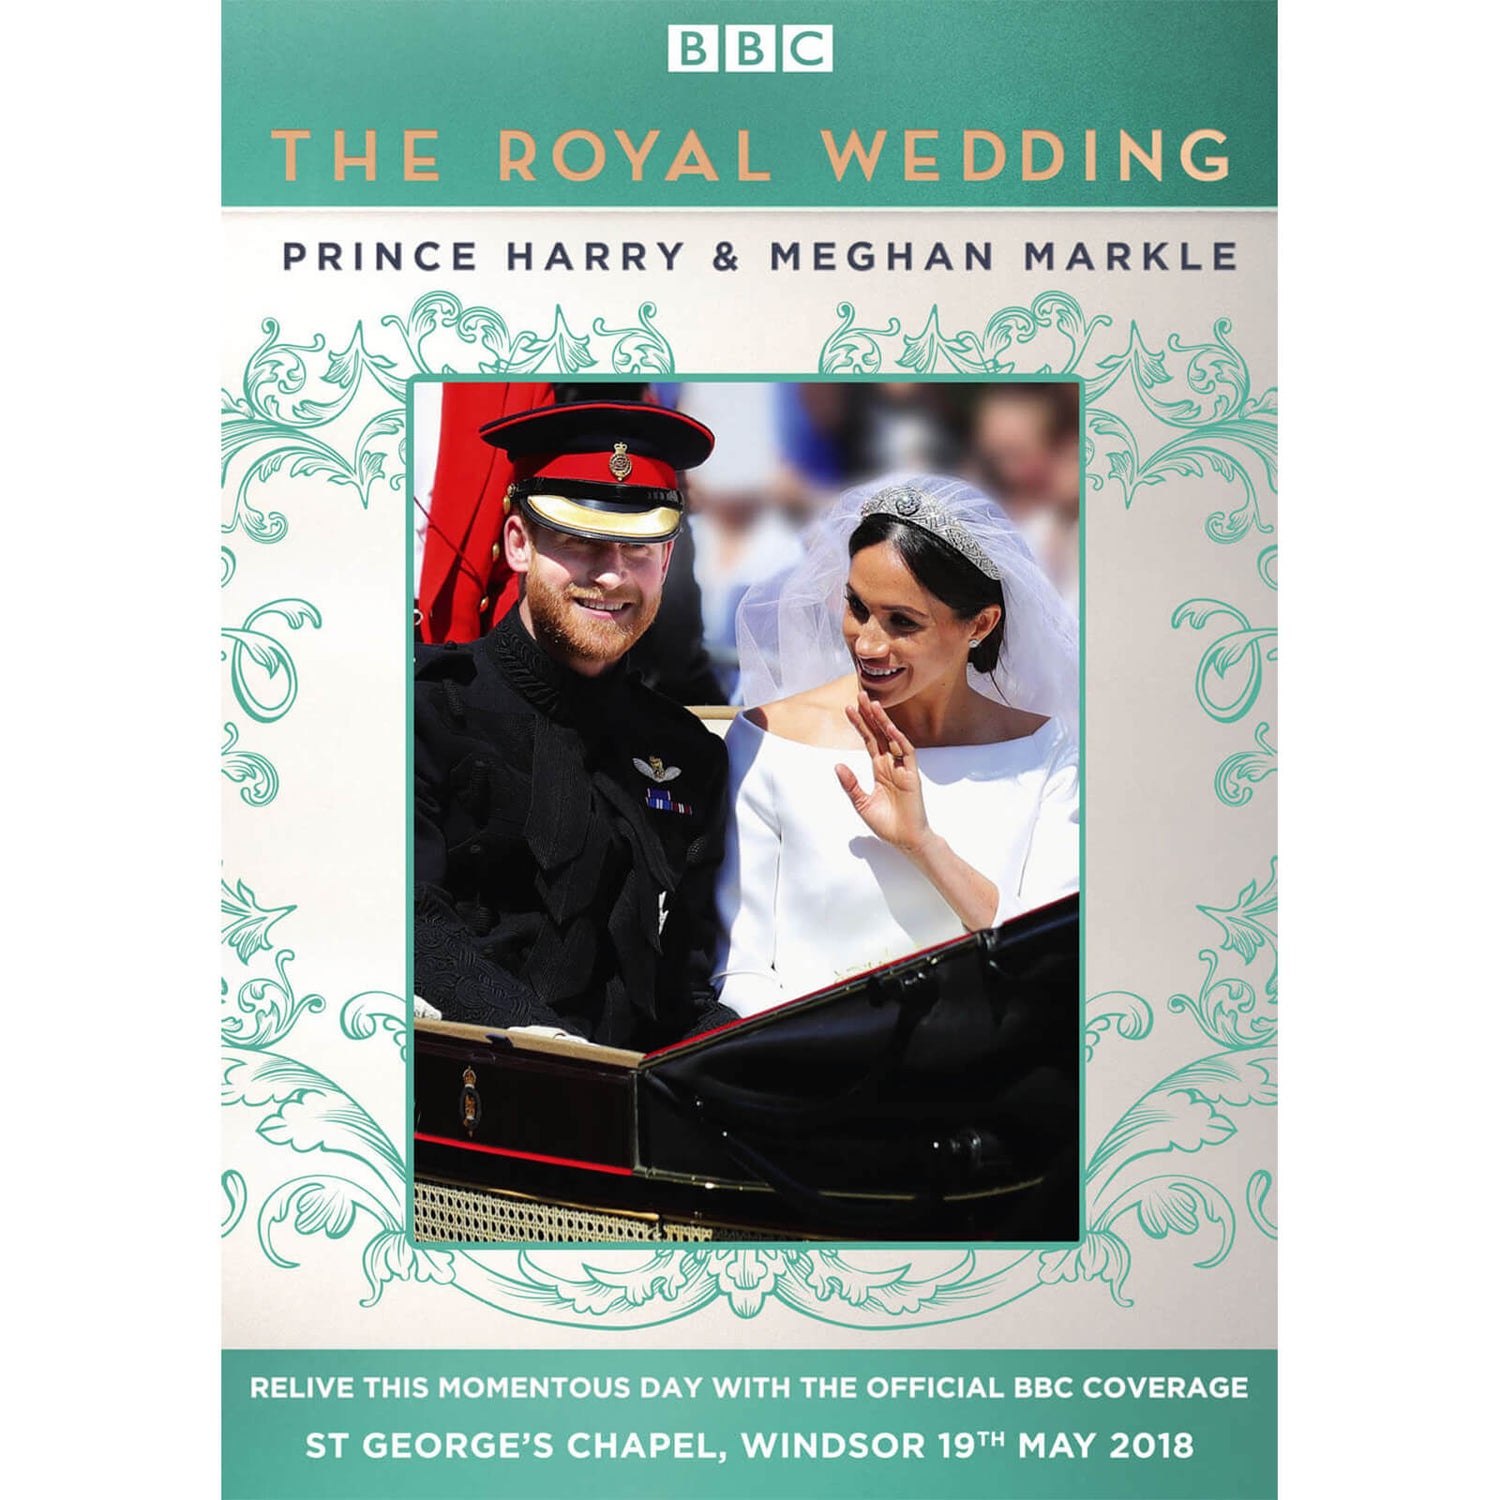 The Royal Wedding - Prince Harry & Meghan Markle